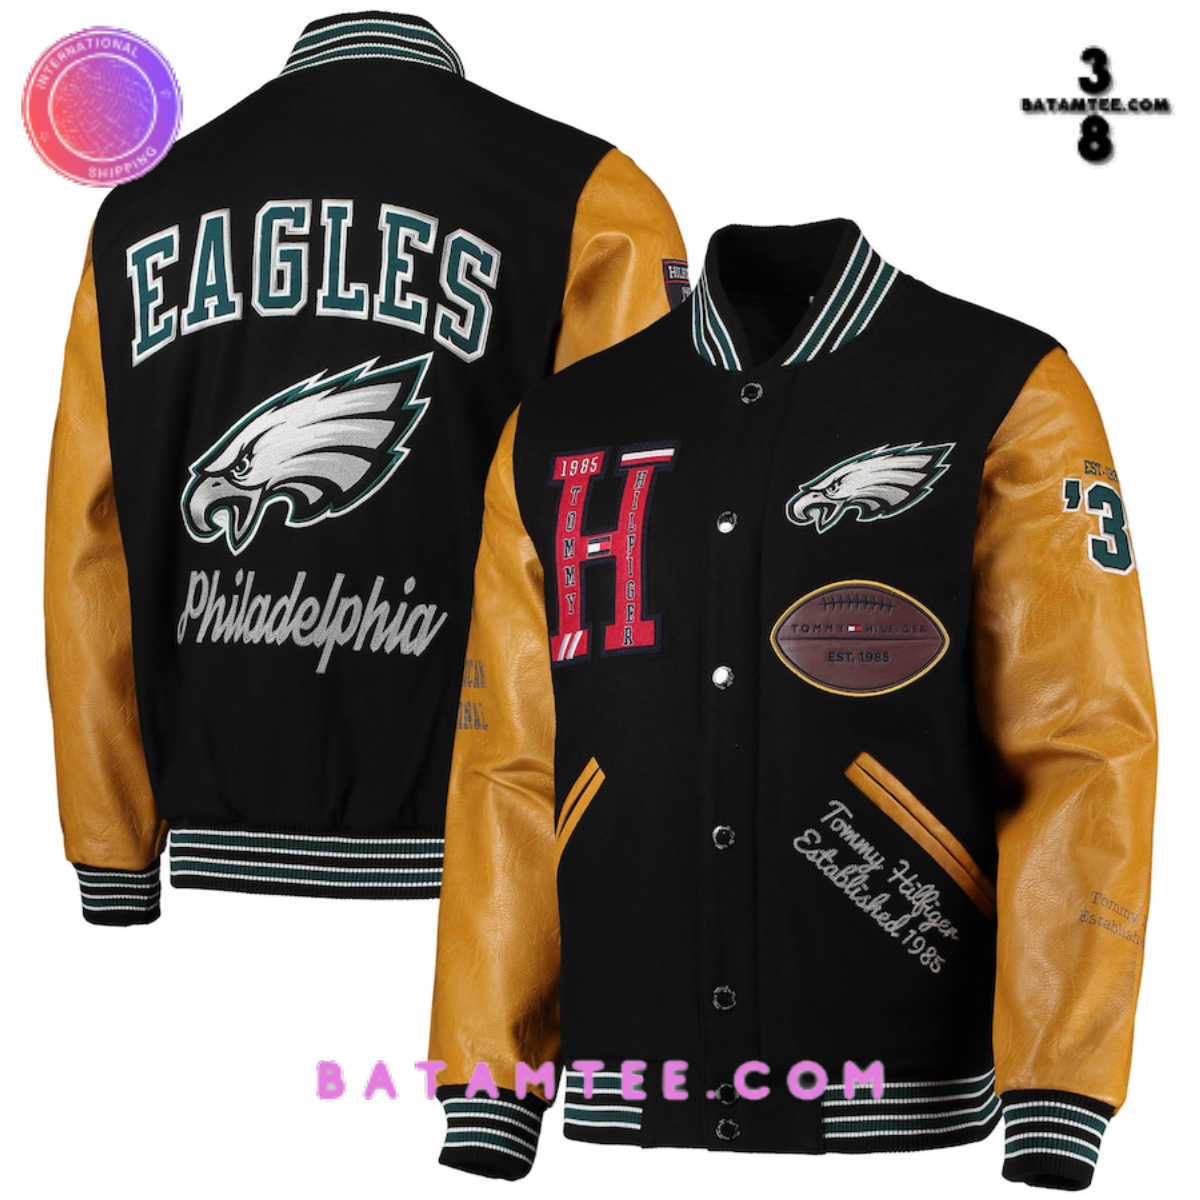 Philadelphia Eagles Black Tan Tommy Hilfiger Heritage Varsity Full-Snap Jacket's Overview - Batamtee Shop - Threads & Totes: Your Style Destination